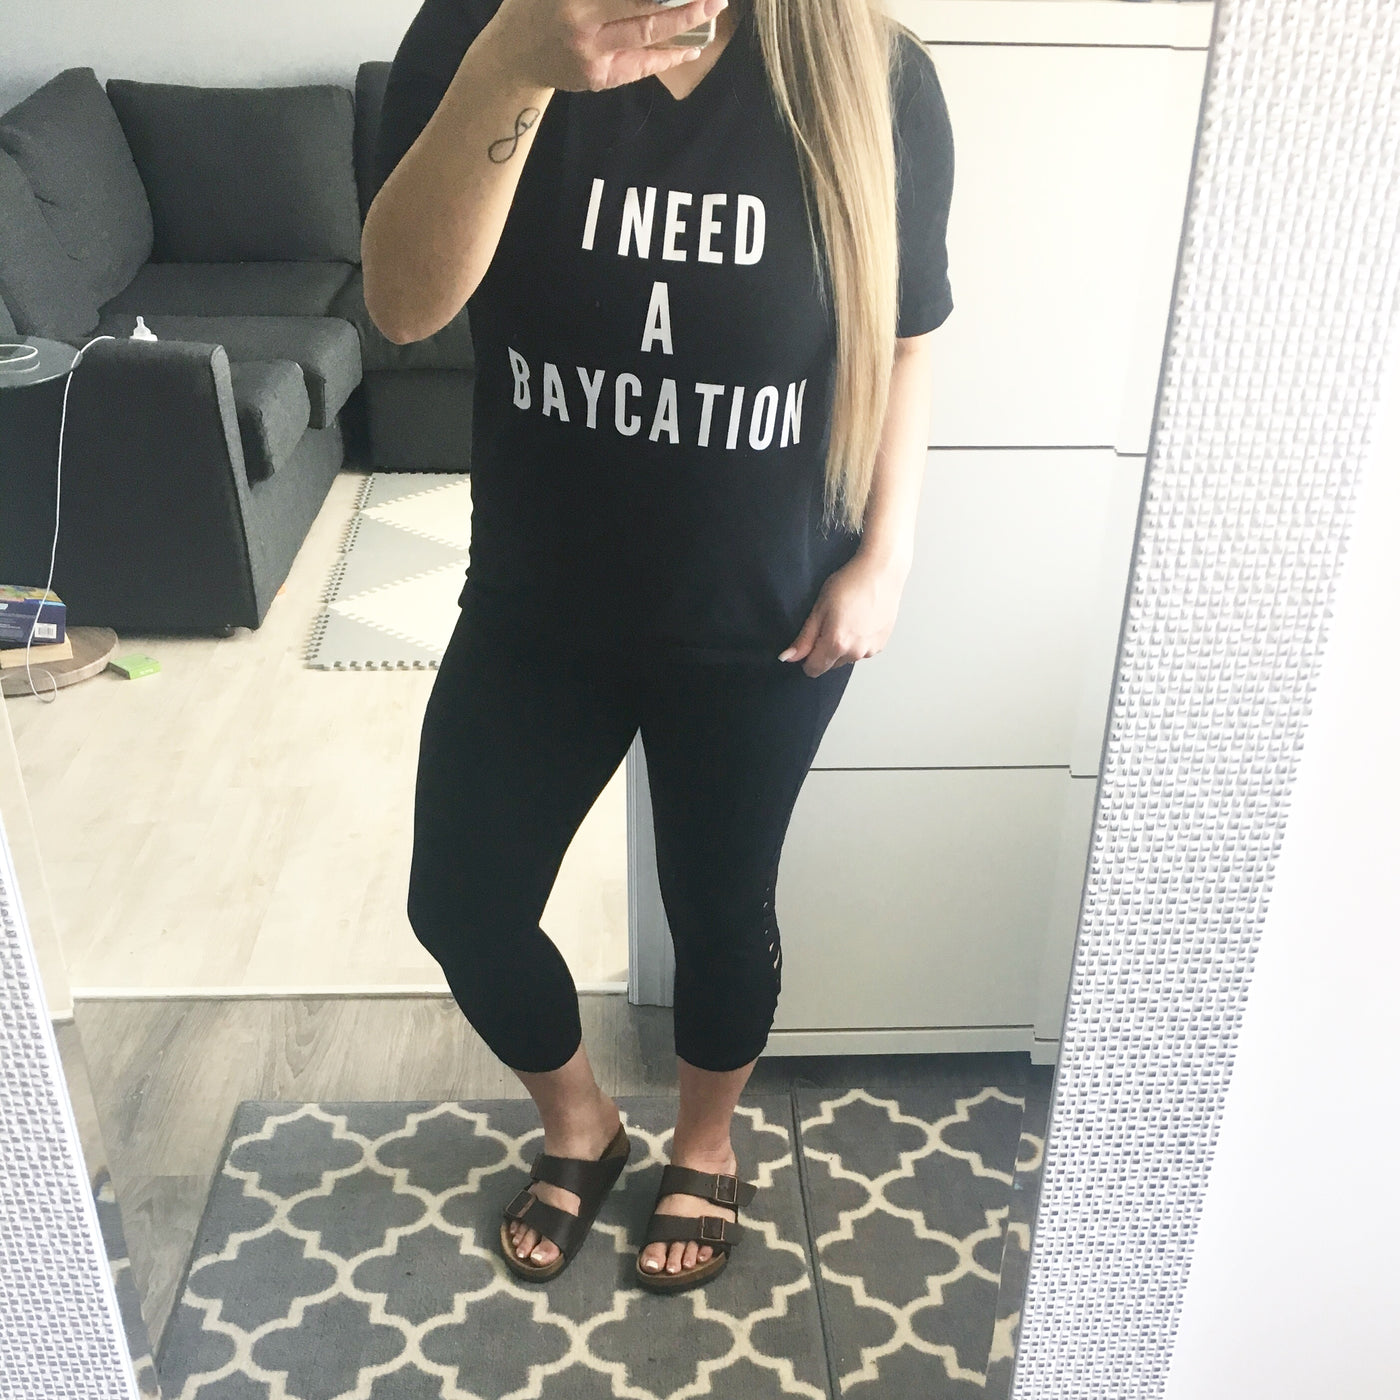 "I Need a Baycation" T-Shirt